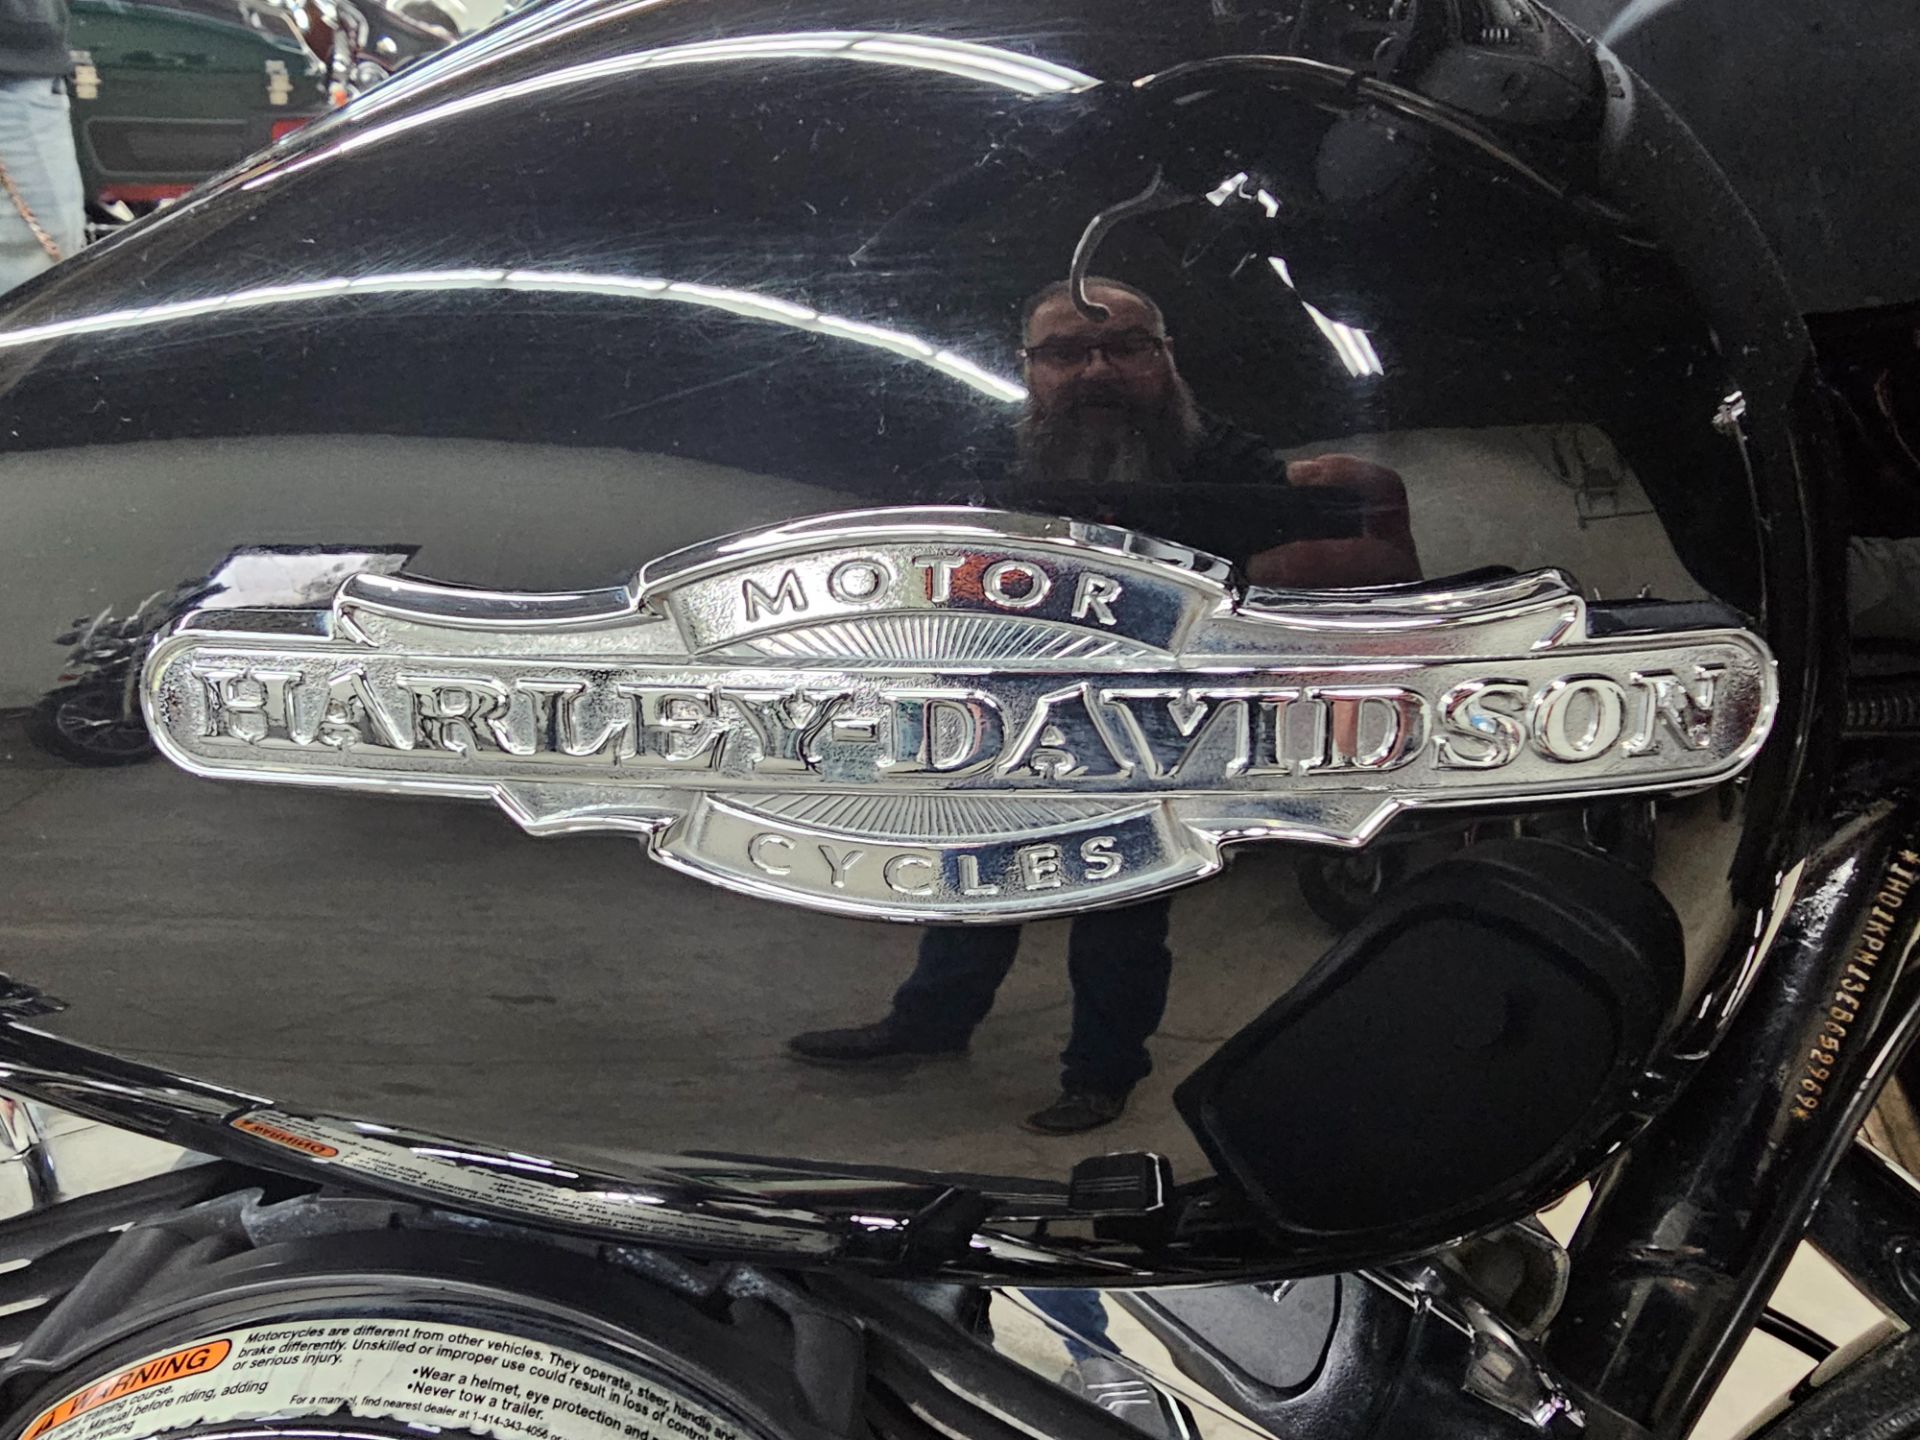 2014 Harley-Davidson Street Glide in Flint, Michigan - Photo 10